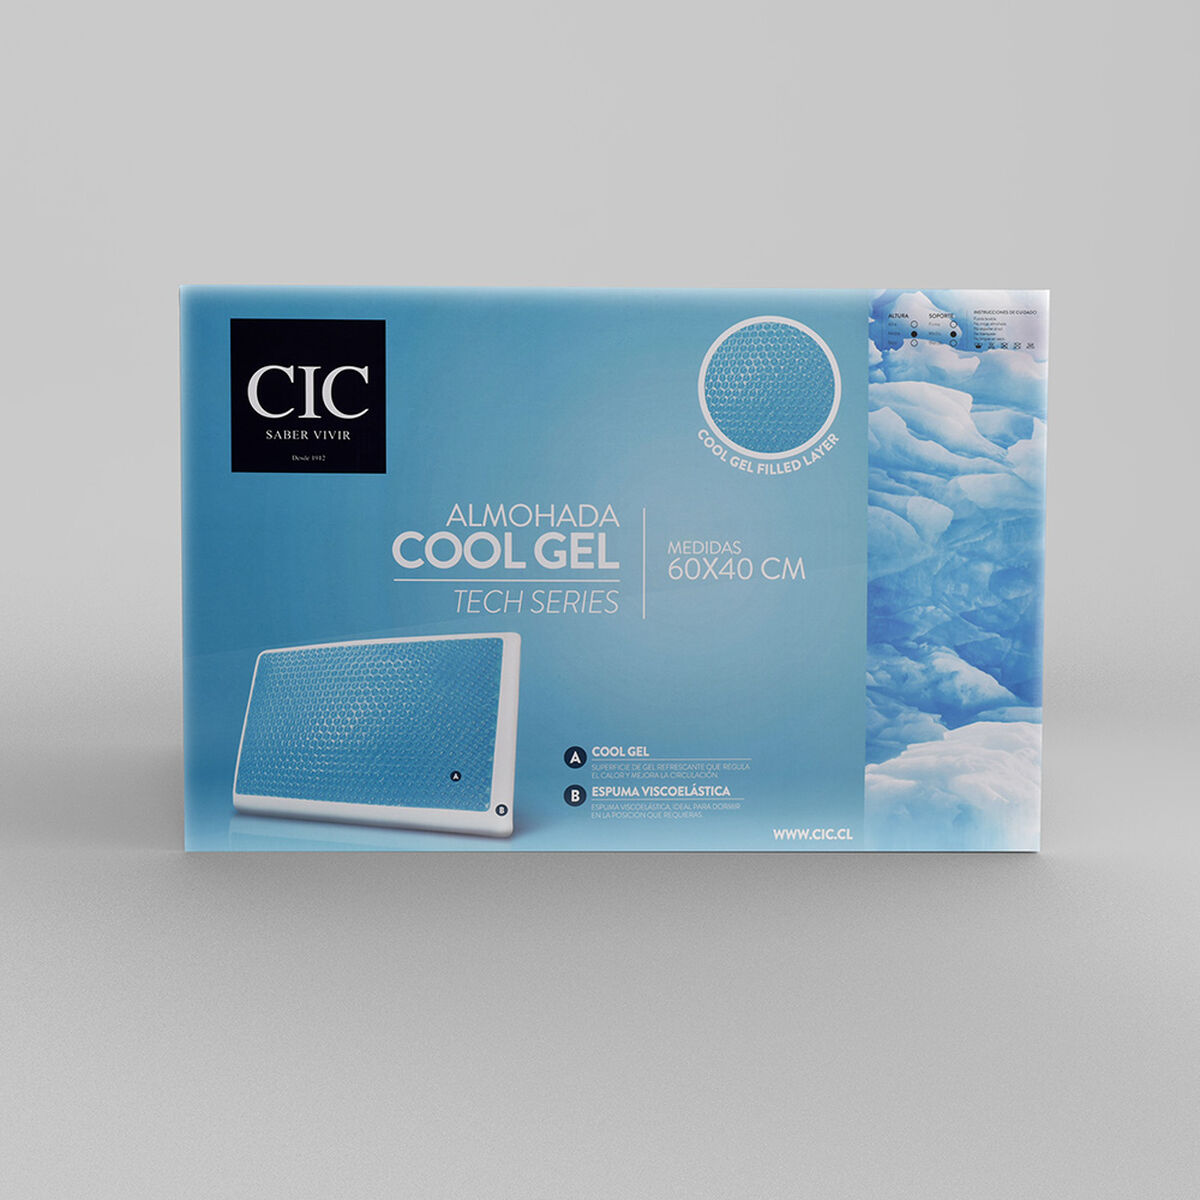 Almohada CIC Cool Gel Tech Series 60 x 40 cm